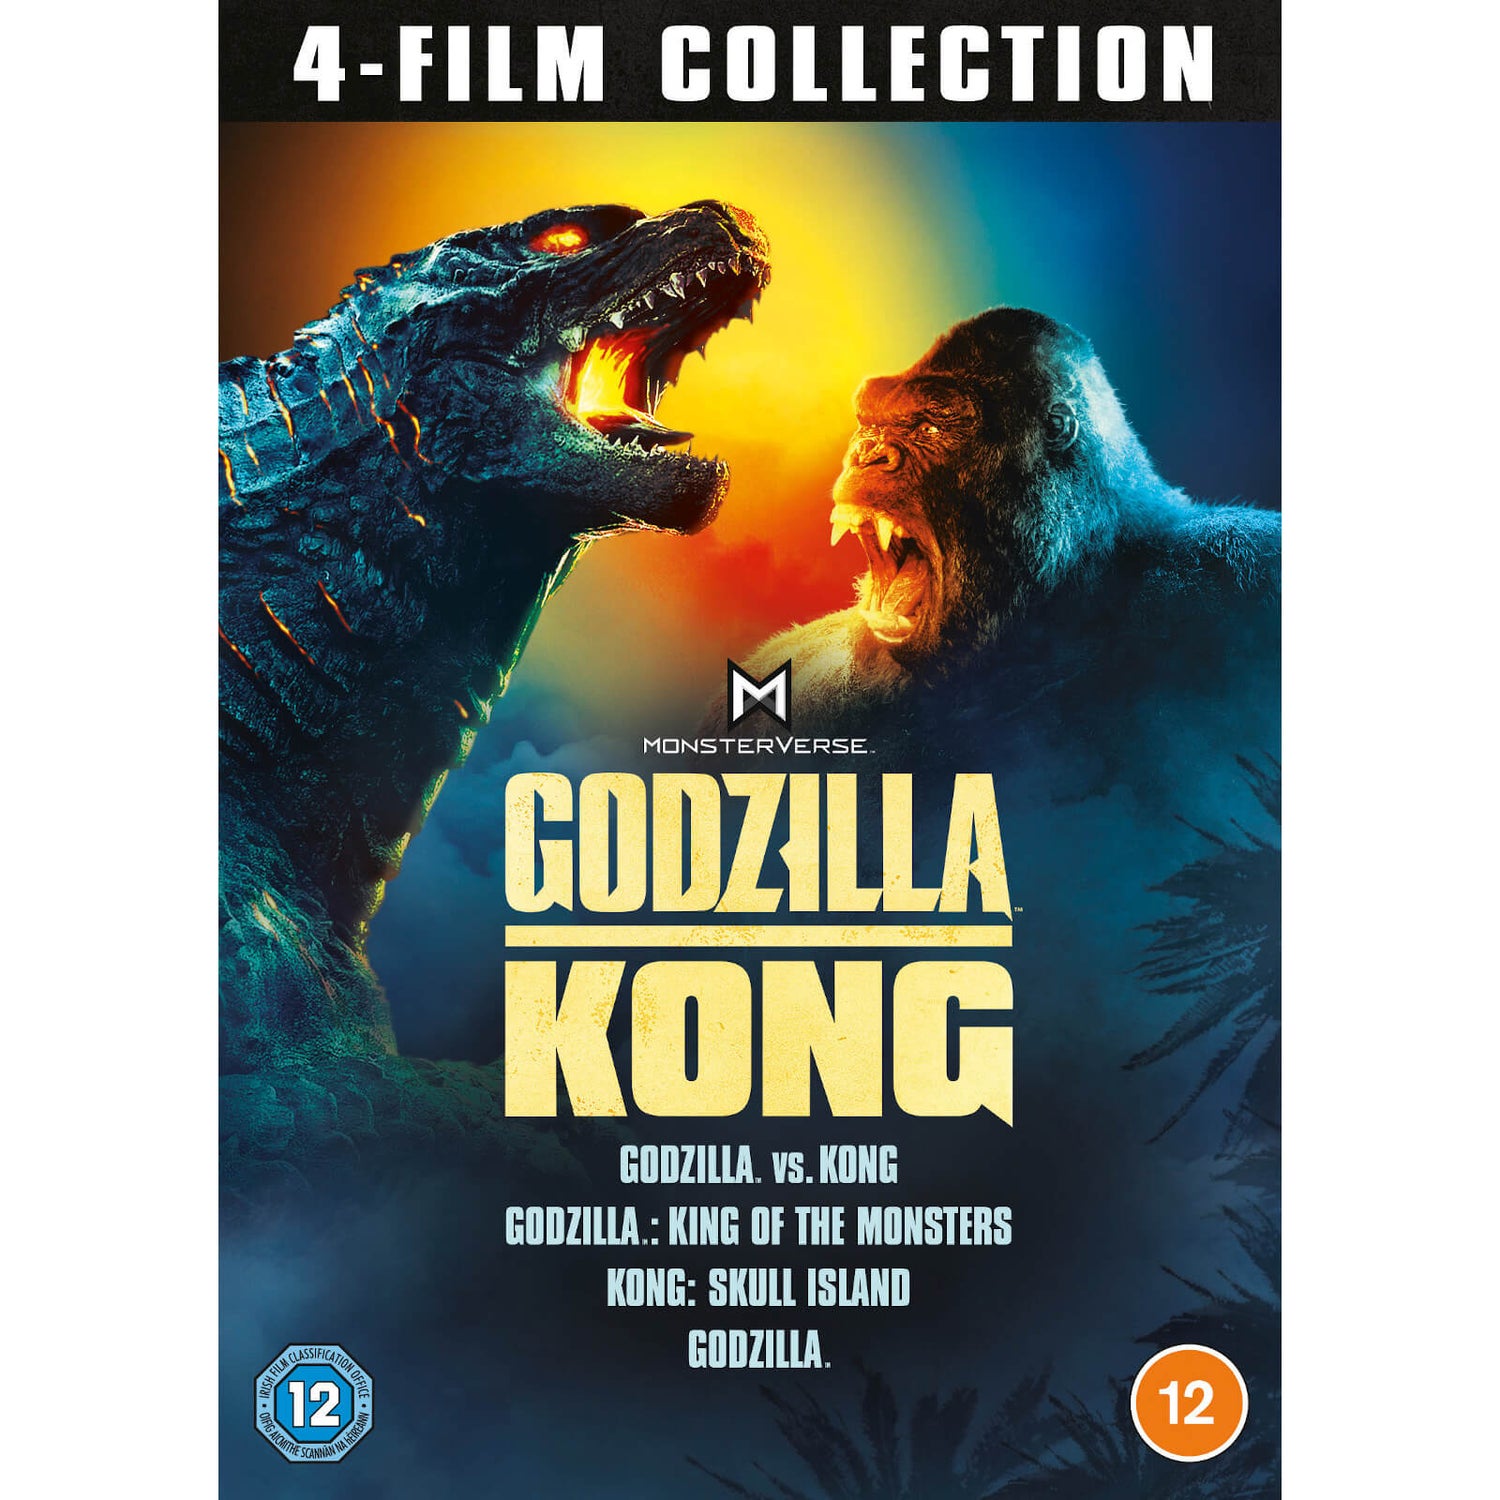 Godzilla and Kong 4-Film Collection